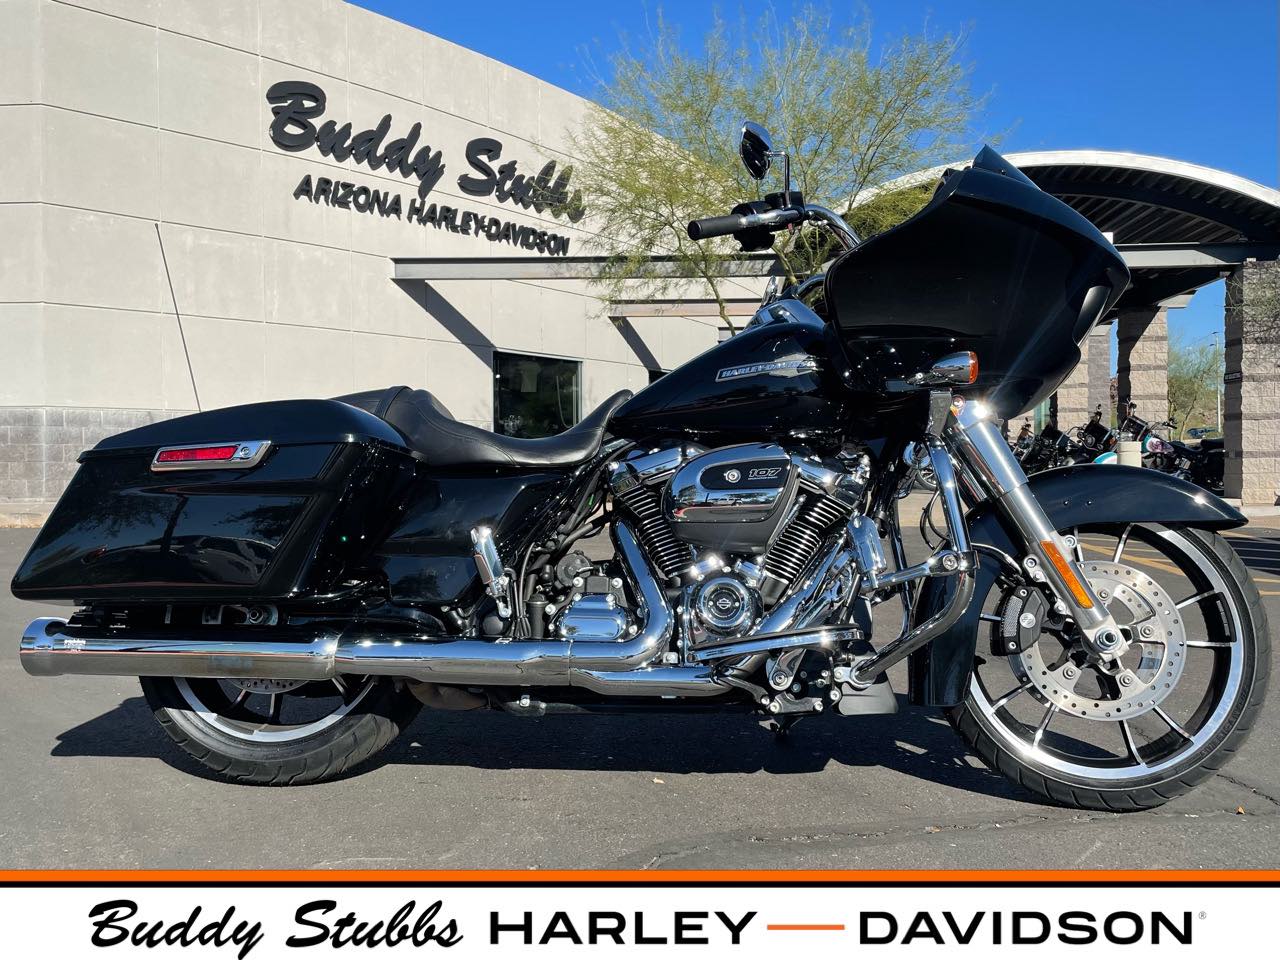 2021 Harley-Davidson Road Glide at Buddy Stubbs Arizona Harley-Davidson